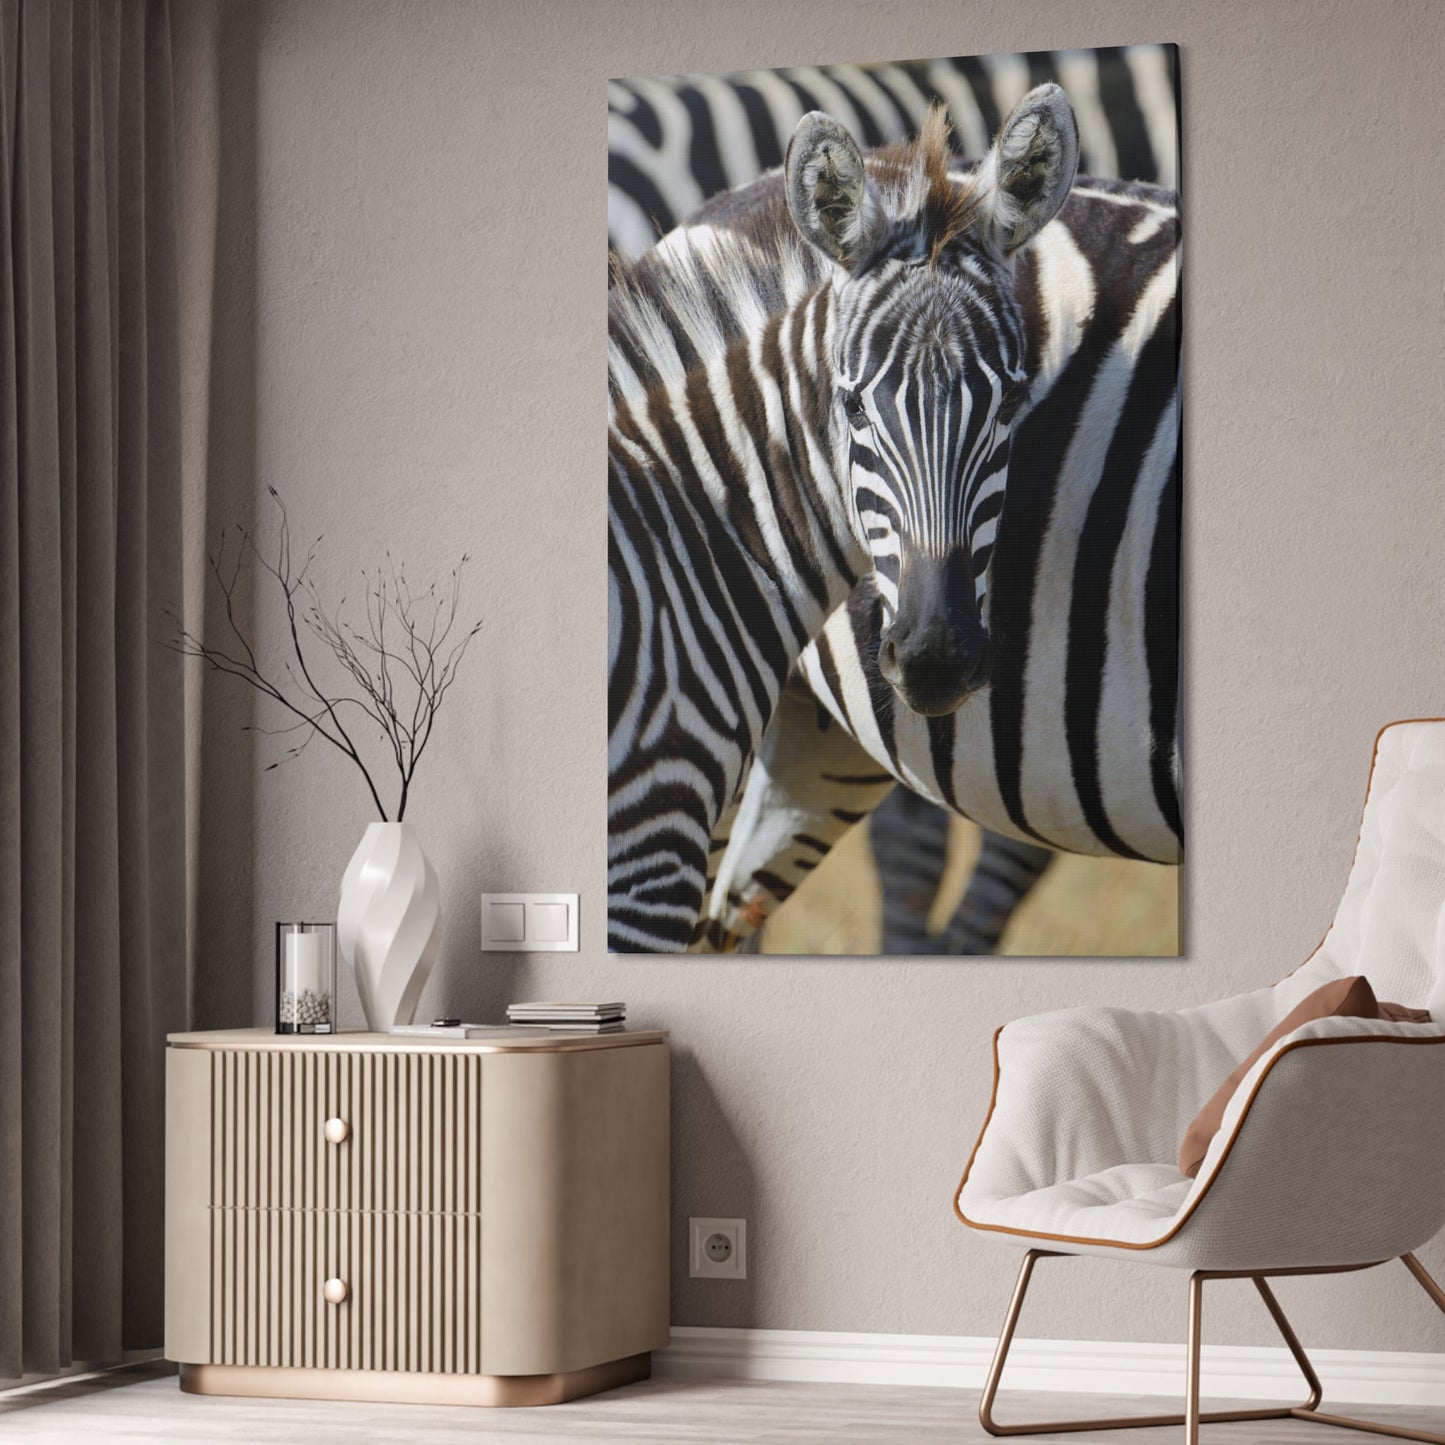 Grazing in the Grasslands: Natural Canvas Print of a Zebra in its Natural Habitat